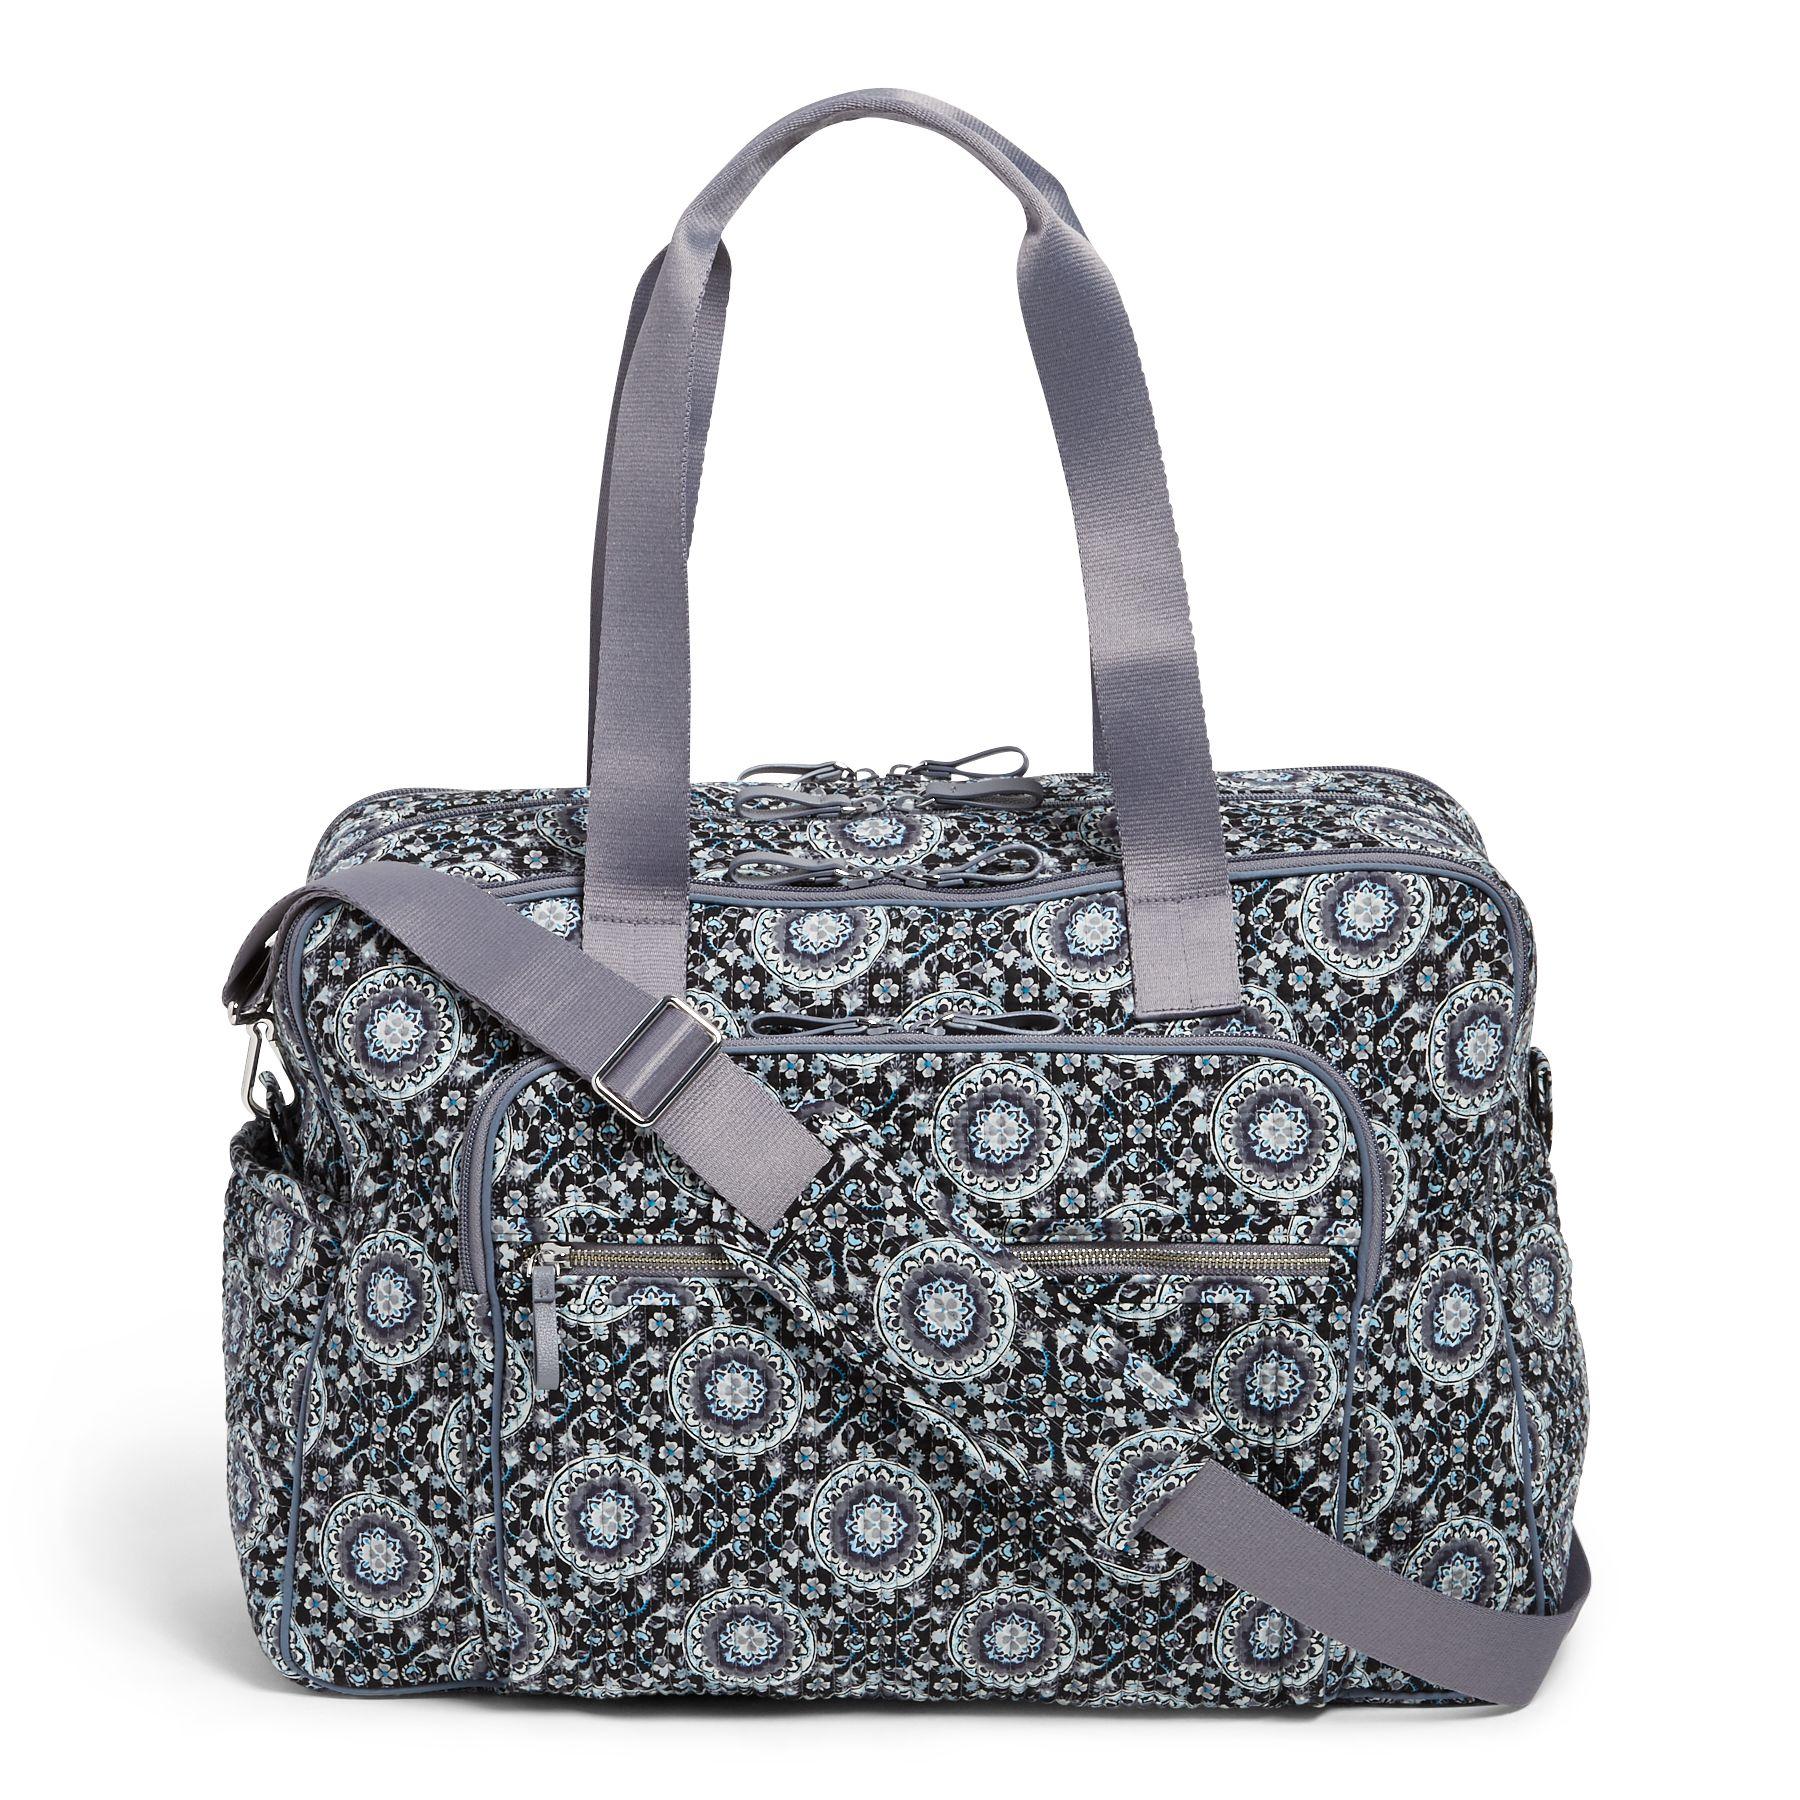 Vera Bradley Iconic Deluxe Weekender Travel Bag in Gray - Lyst